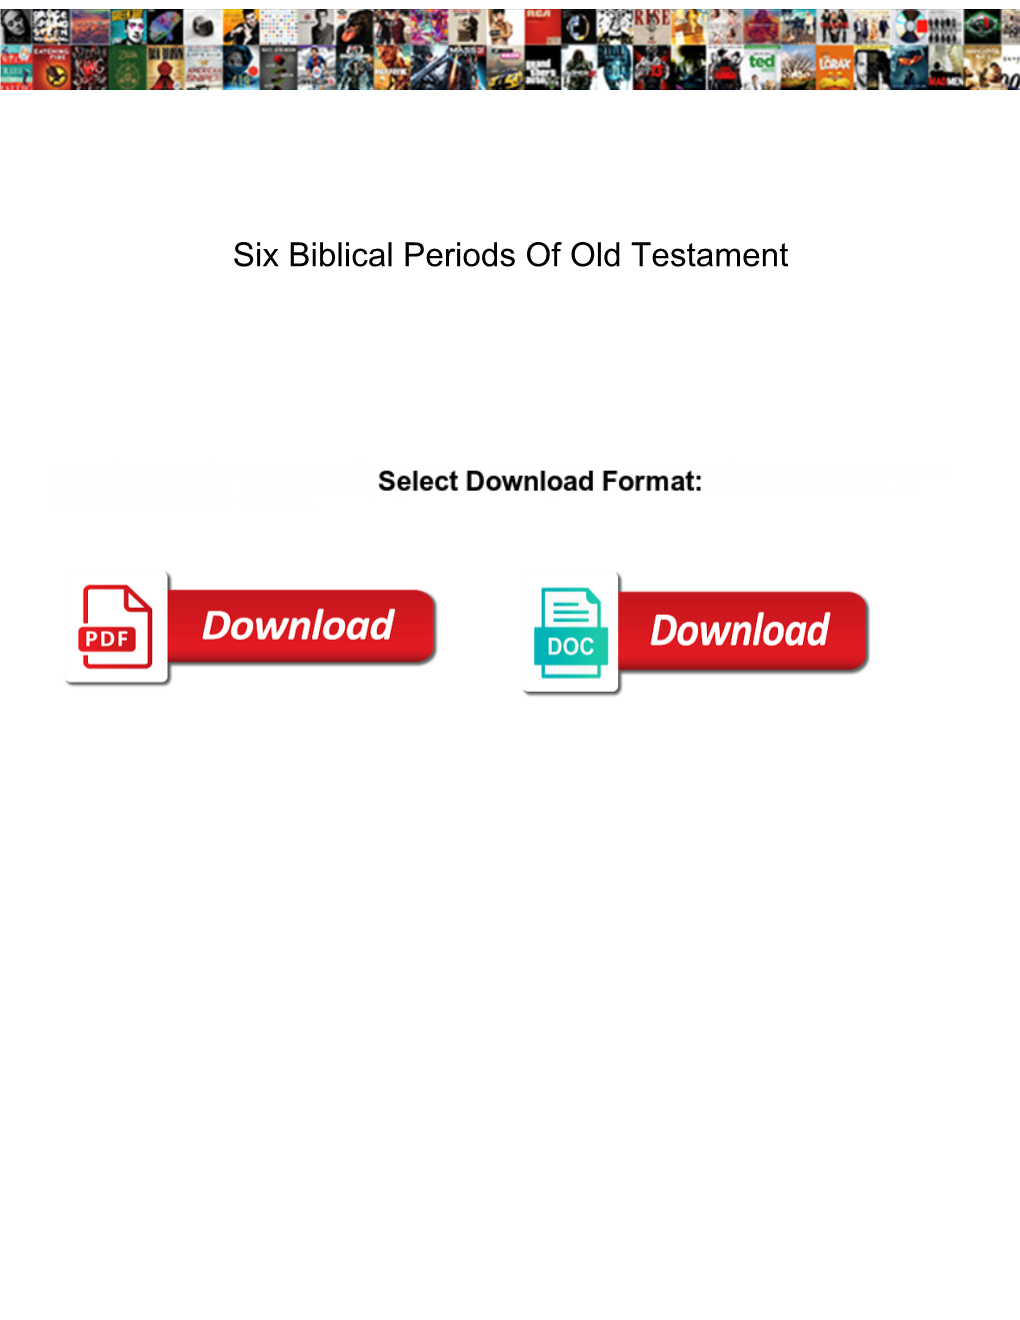 Six Biblical Periods of Old Testament